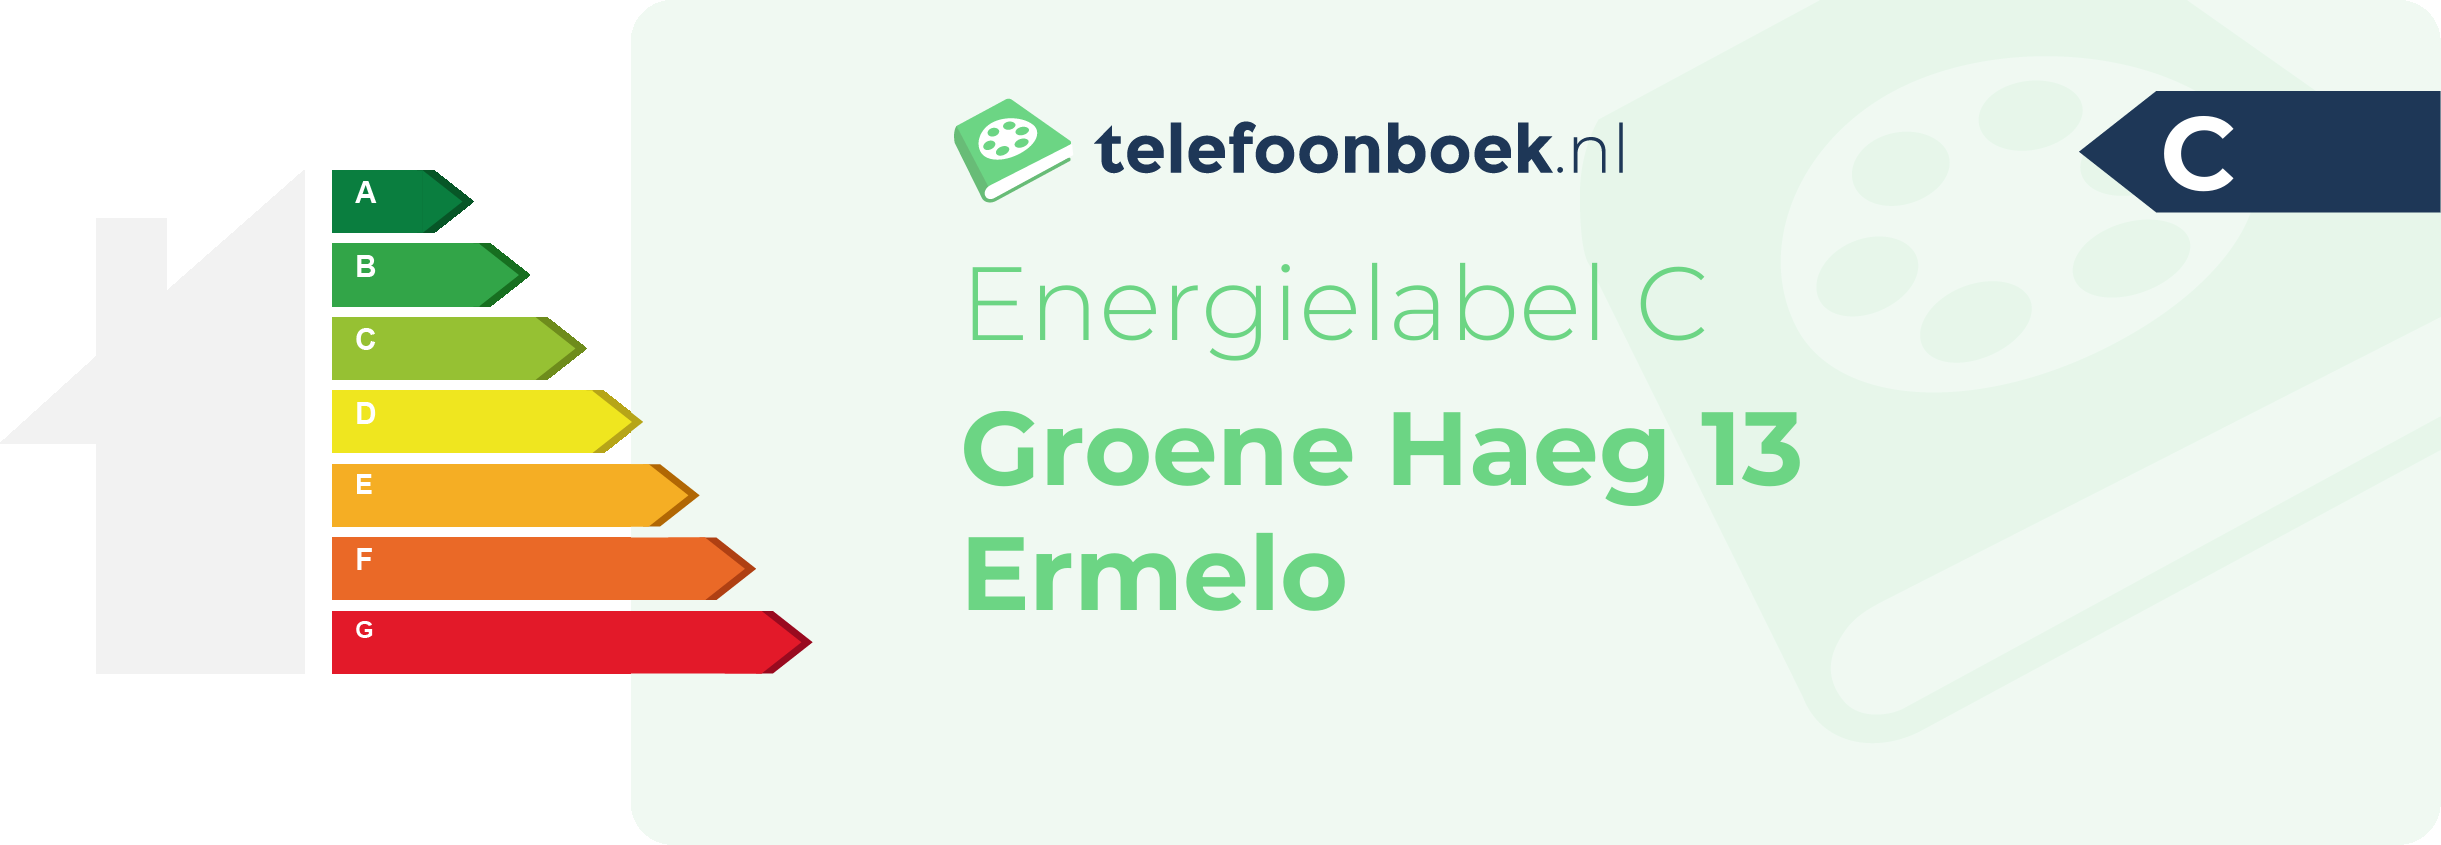 Energielabel Groene Haeg 13 Ermelo